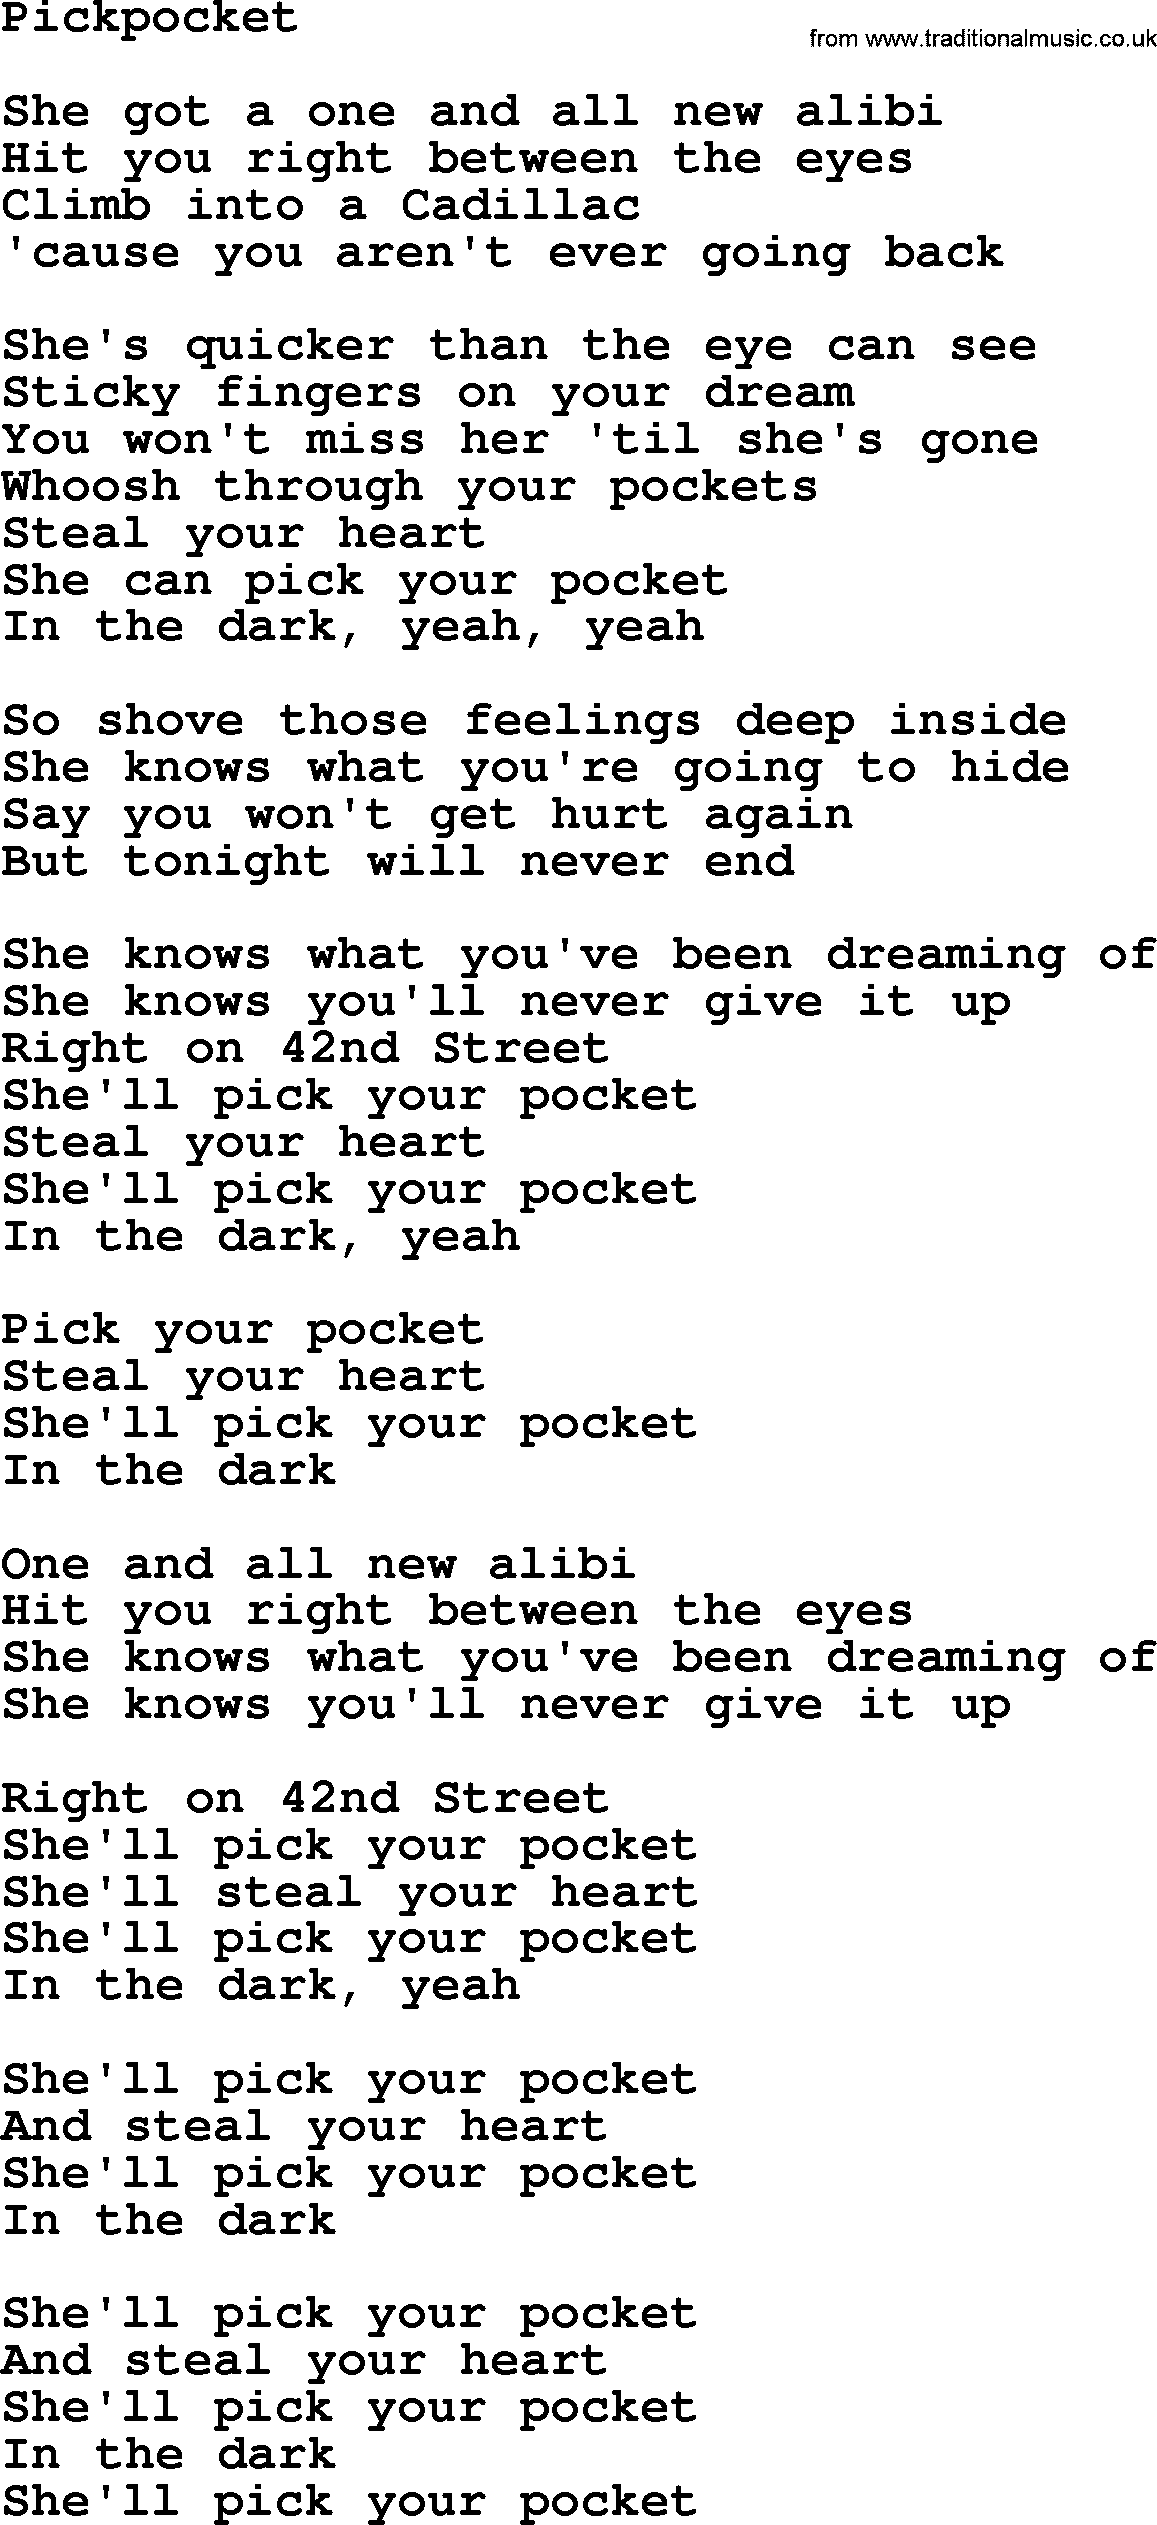 The Byrds song Pickpocket, lyrics